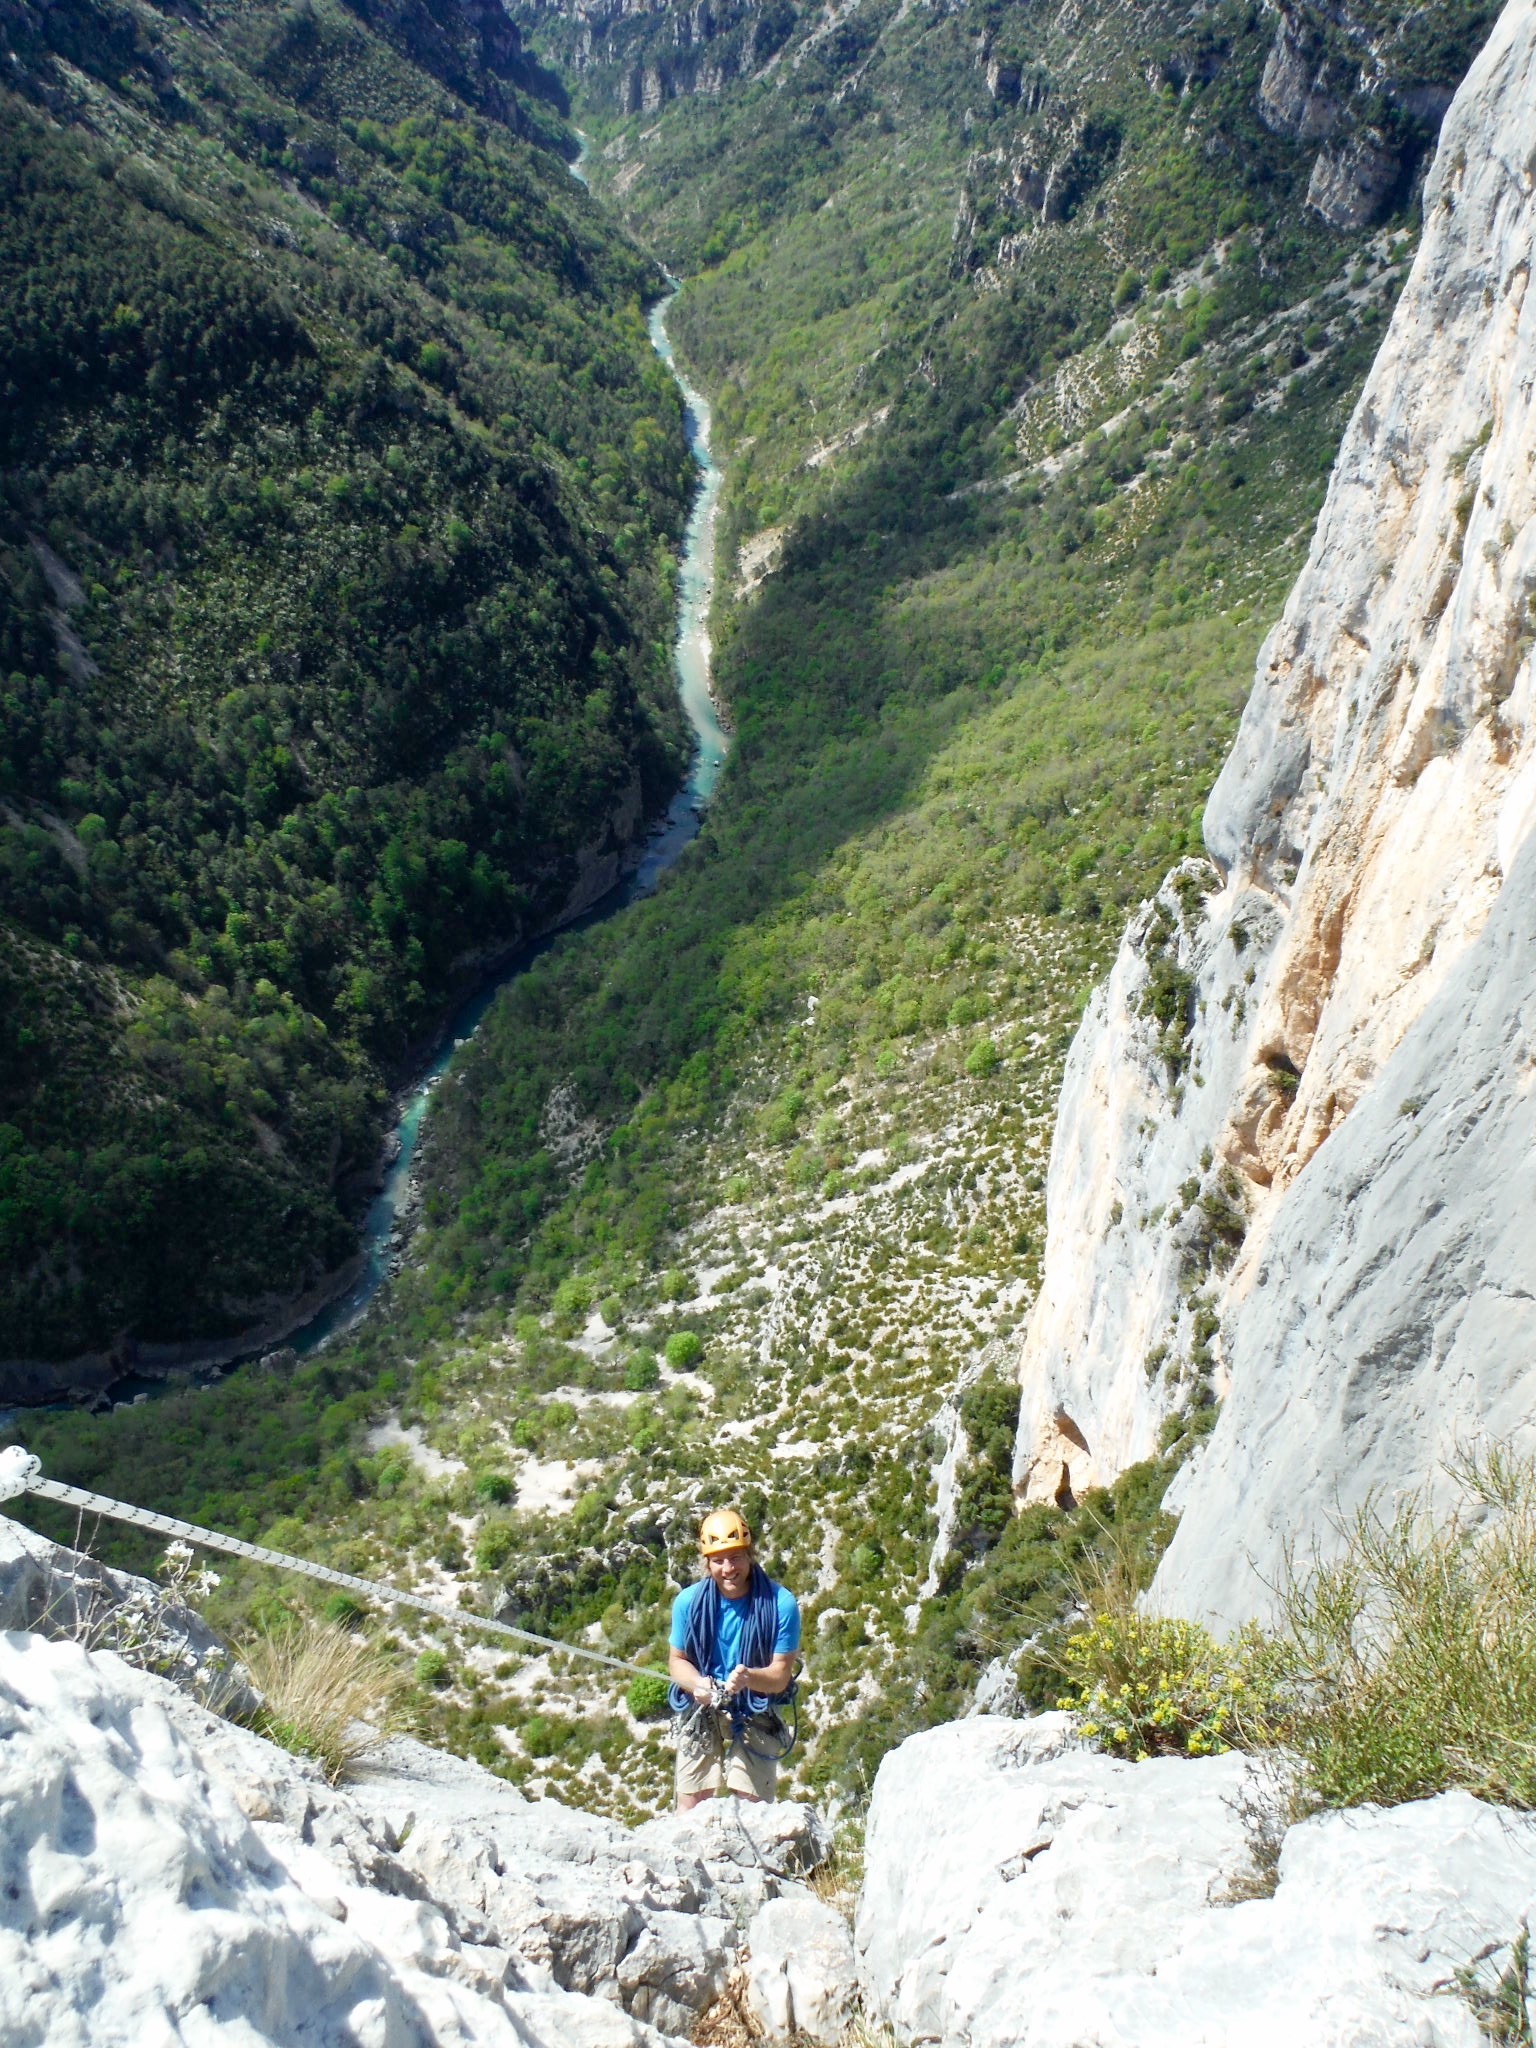 Abseil access into the Verdon Gorge